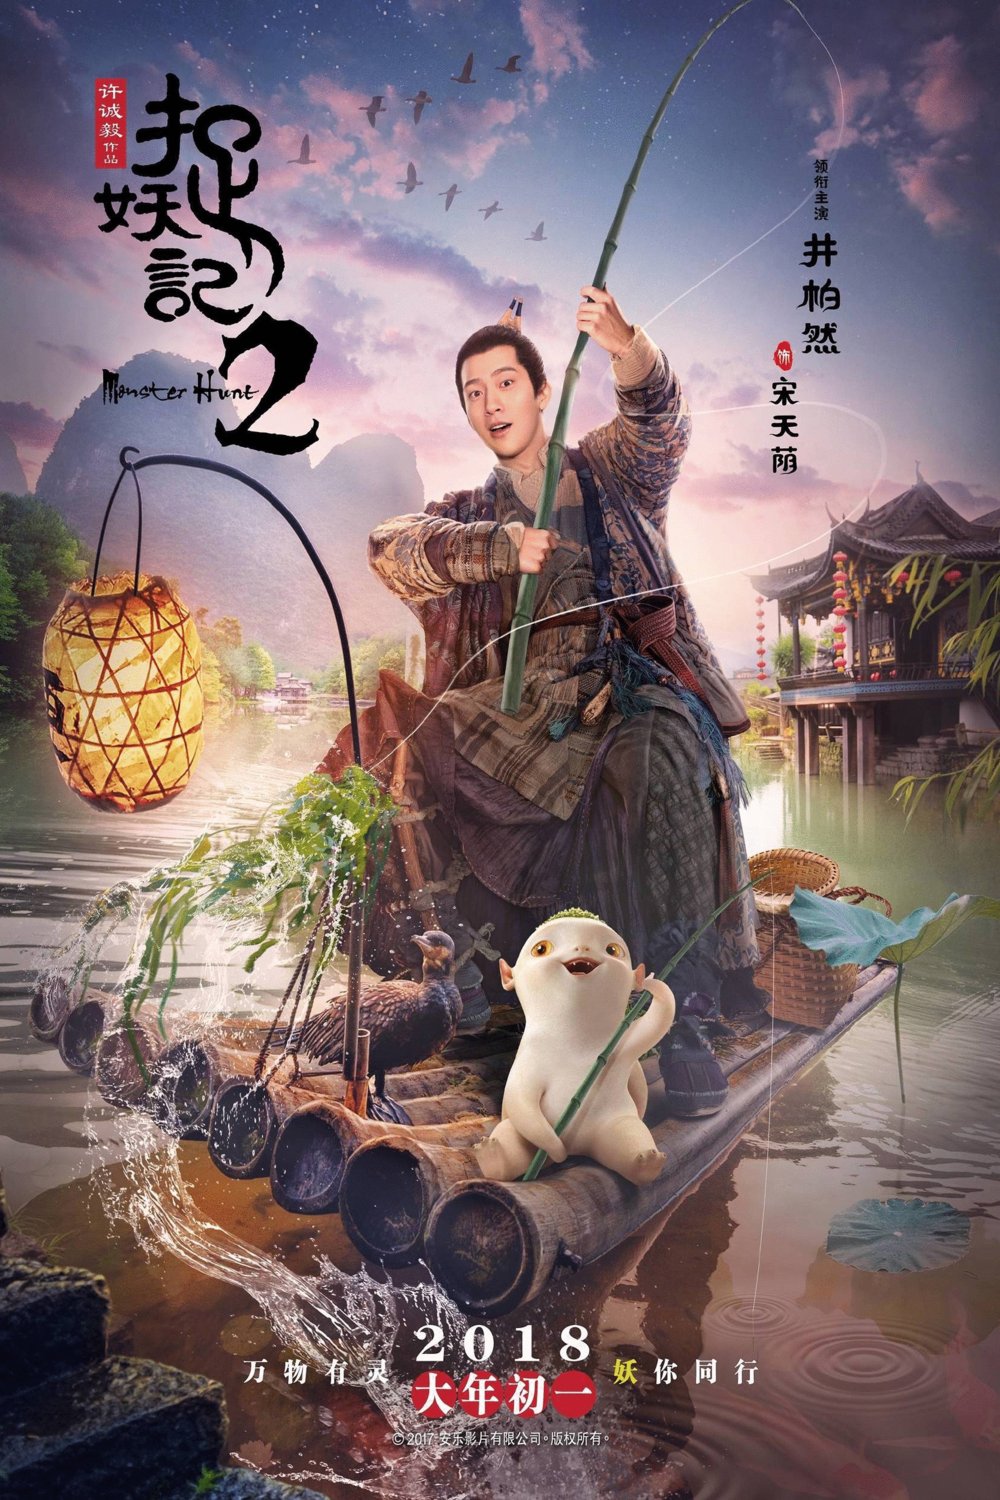 L'affiche originale du film Zhuo yao ji 2 en mandarin